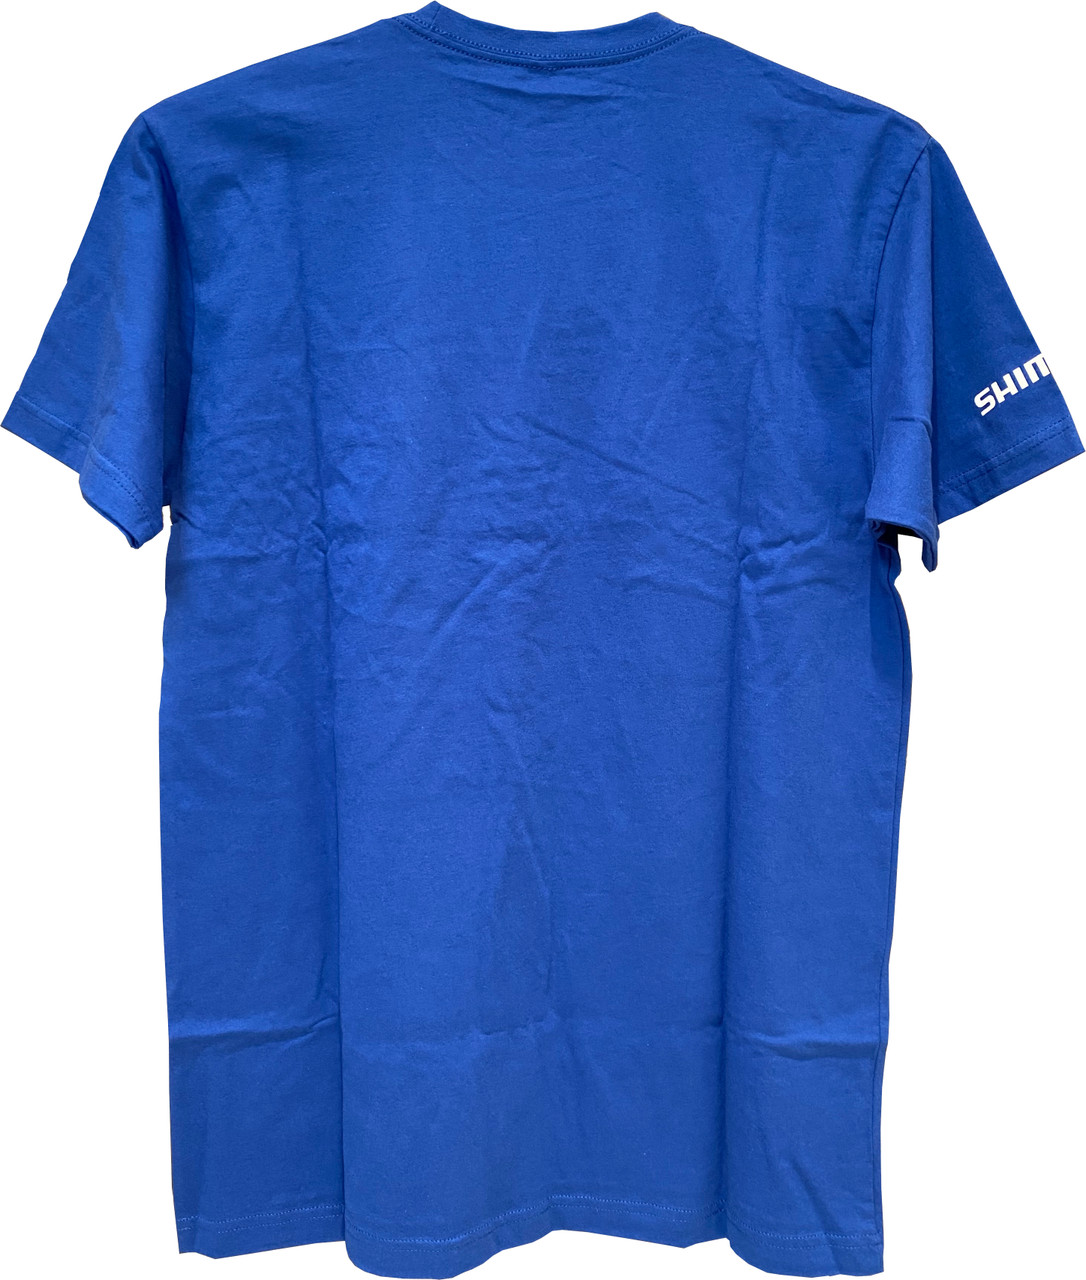 Shimano Short Sleeve Cotton Fishing Tee Shirt Royal Blue XL